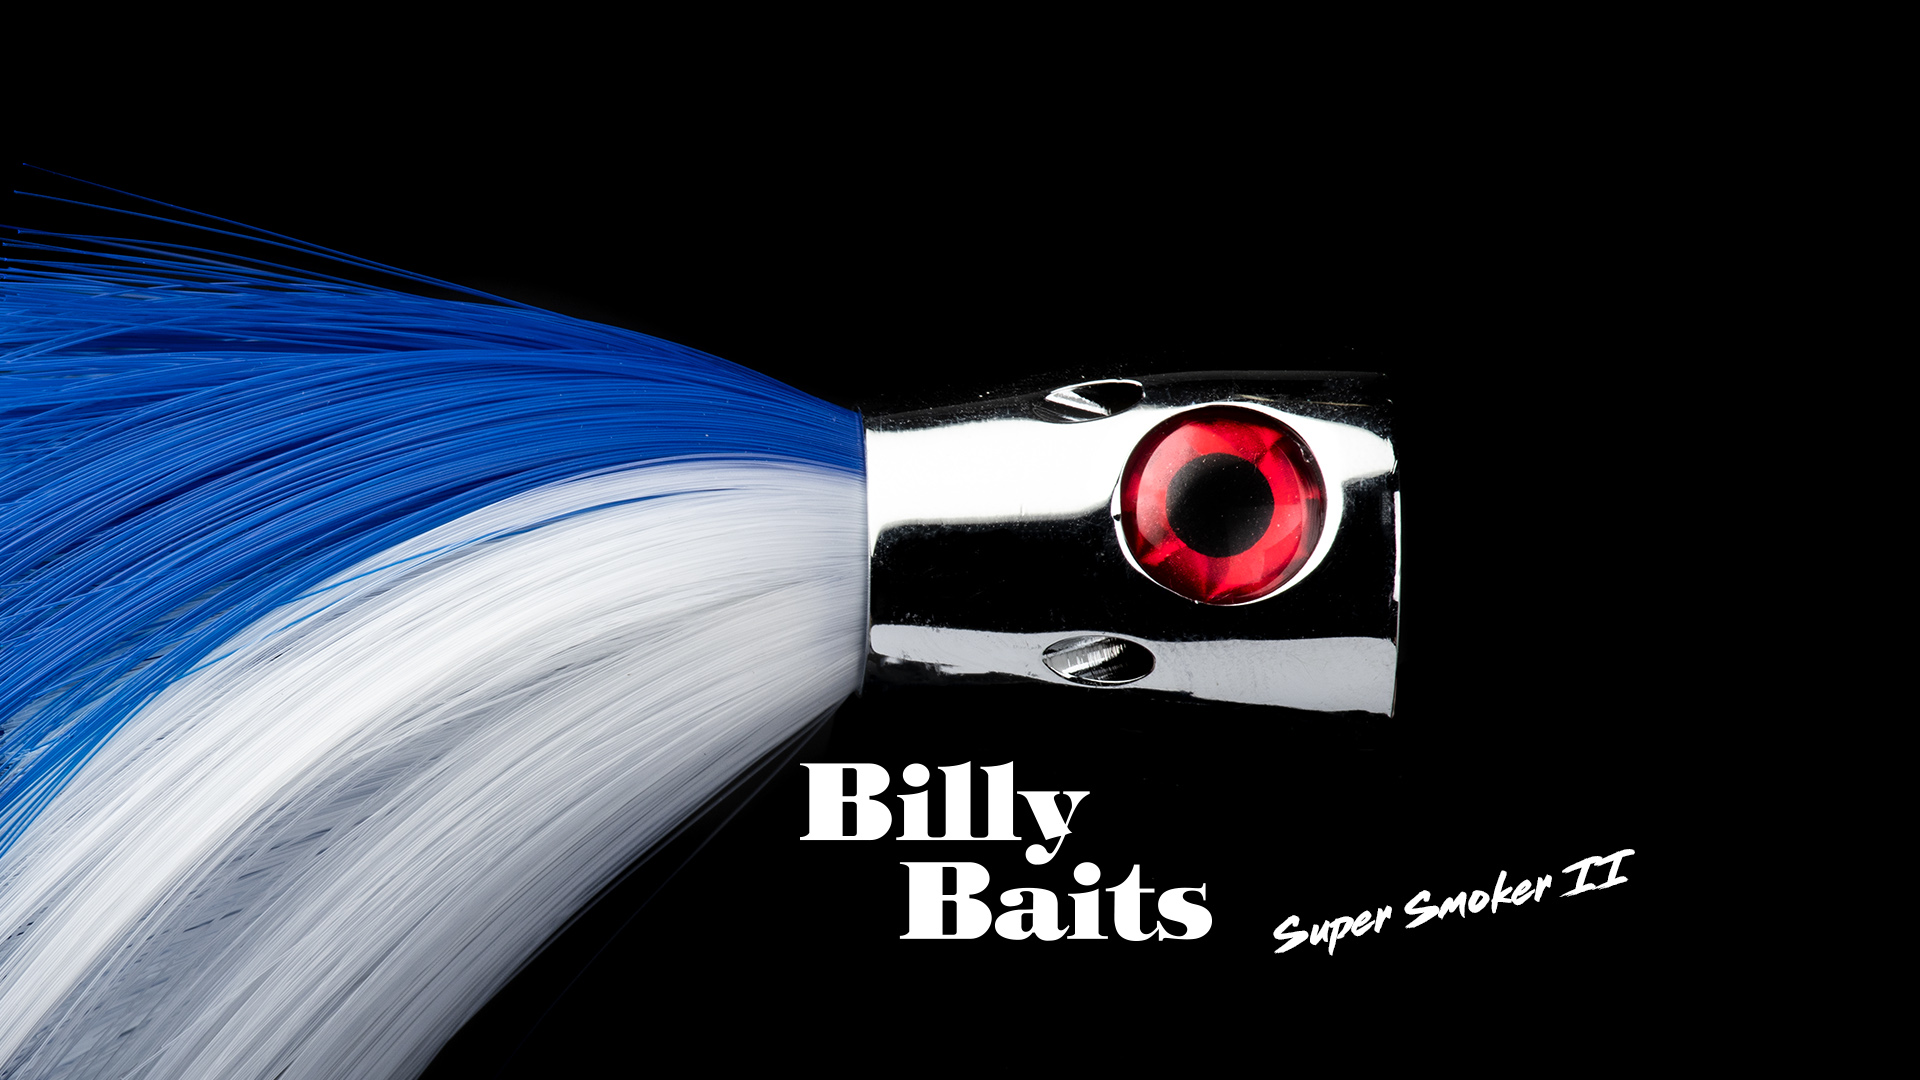 Billy Baits Super Smoker II – Way Of Fishing